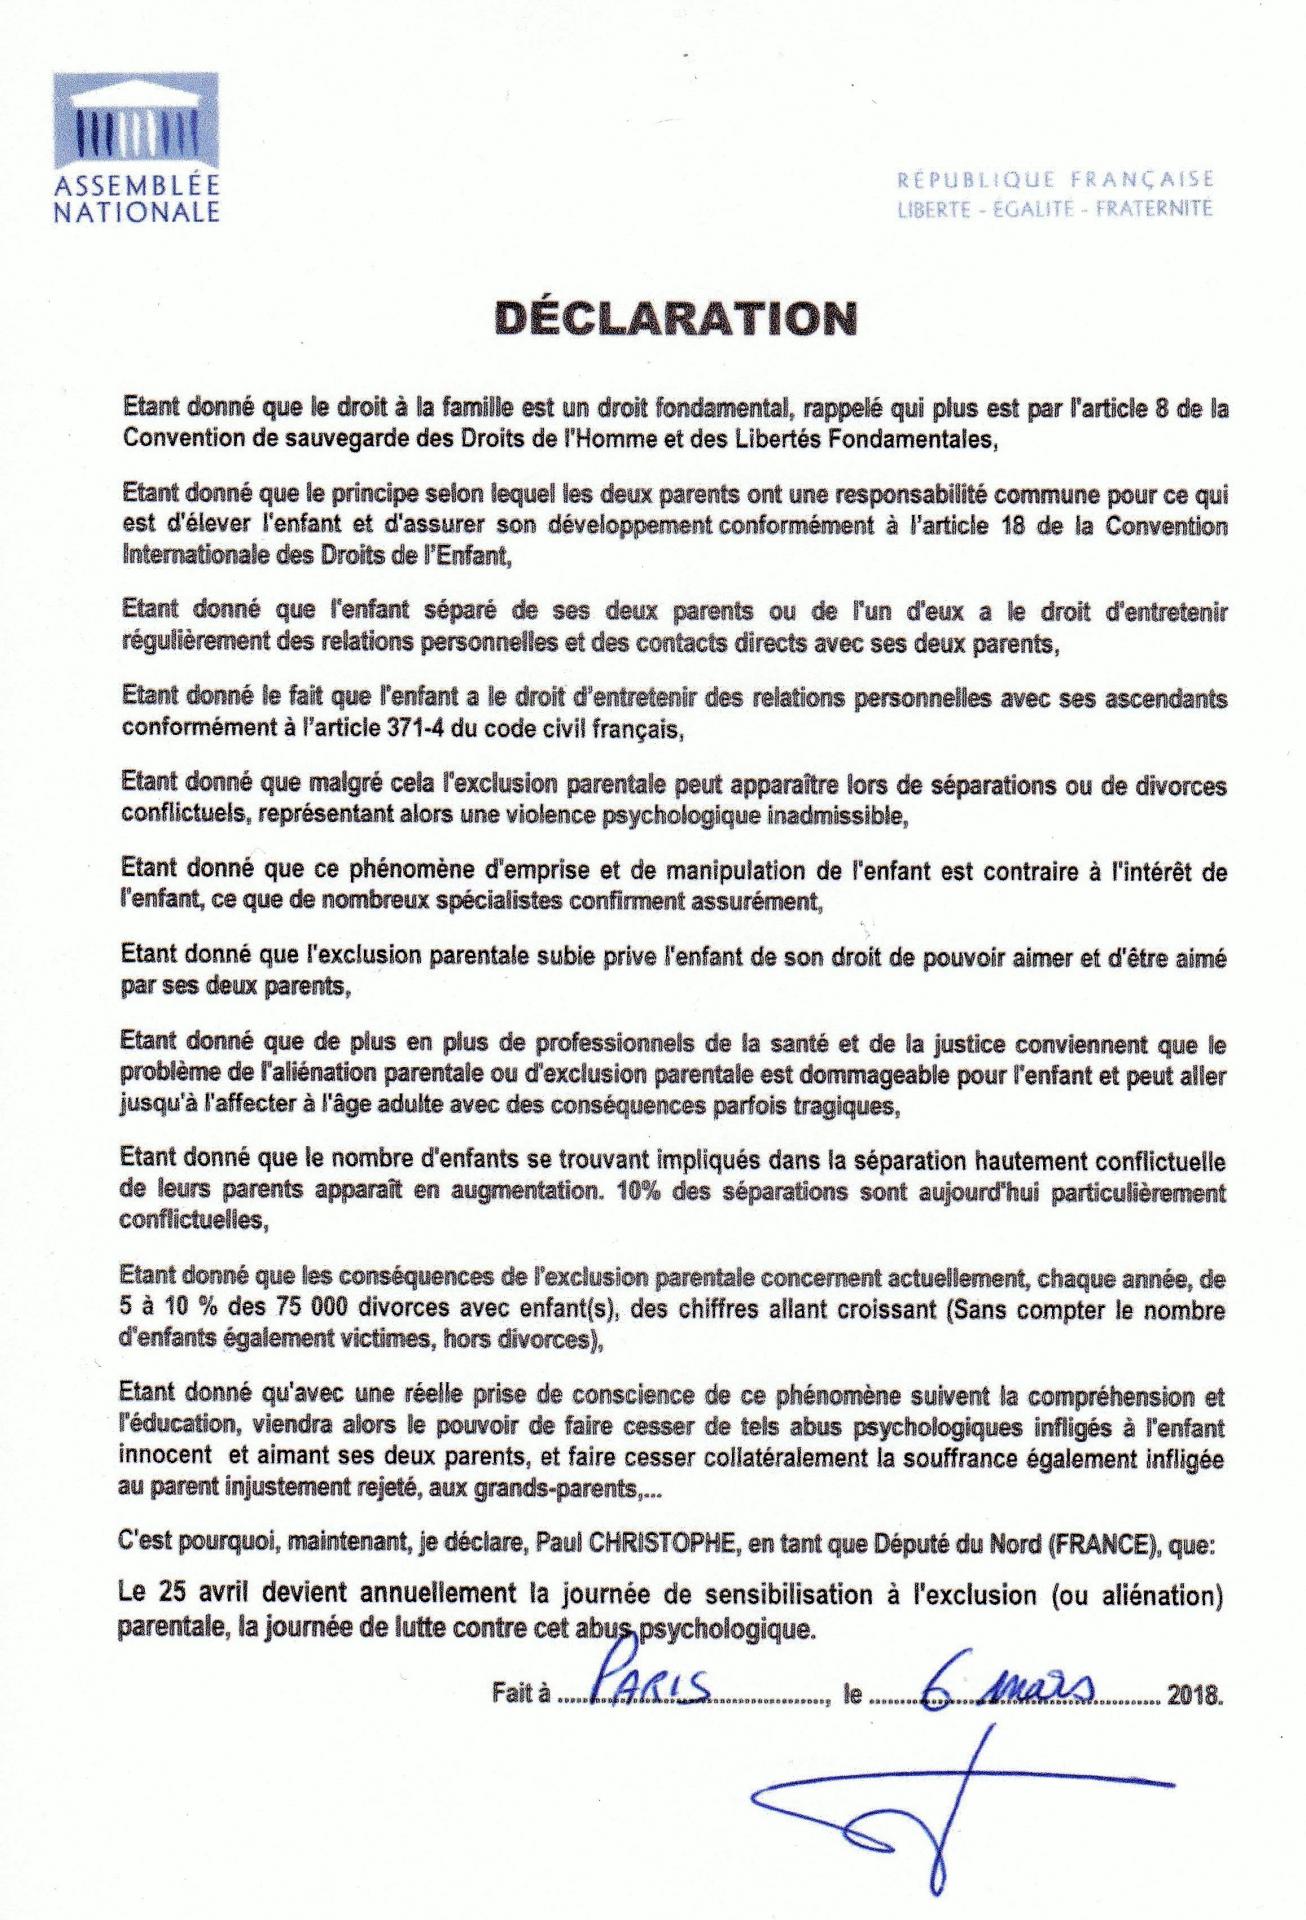 Paul christophe declaration 2018